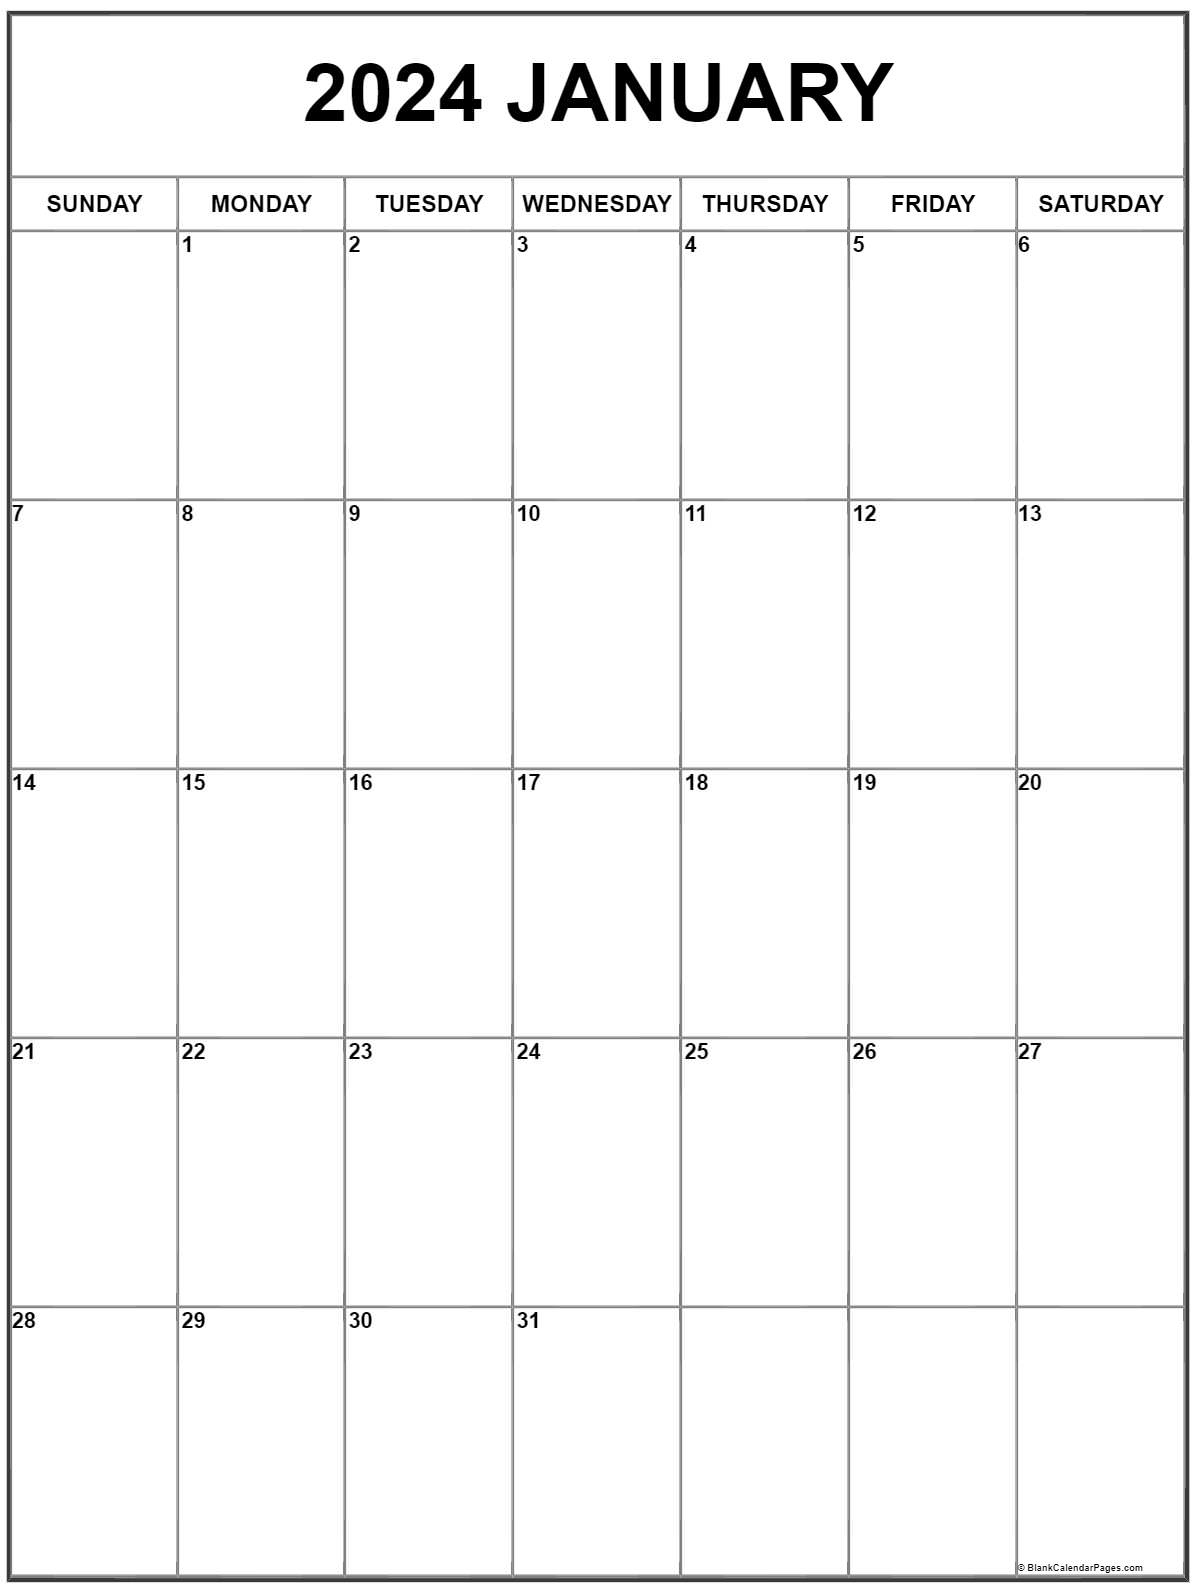 2024 Printable Calendar By Month Vertical Lotti Rhianon